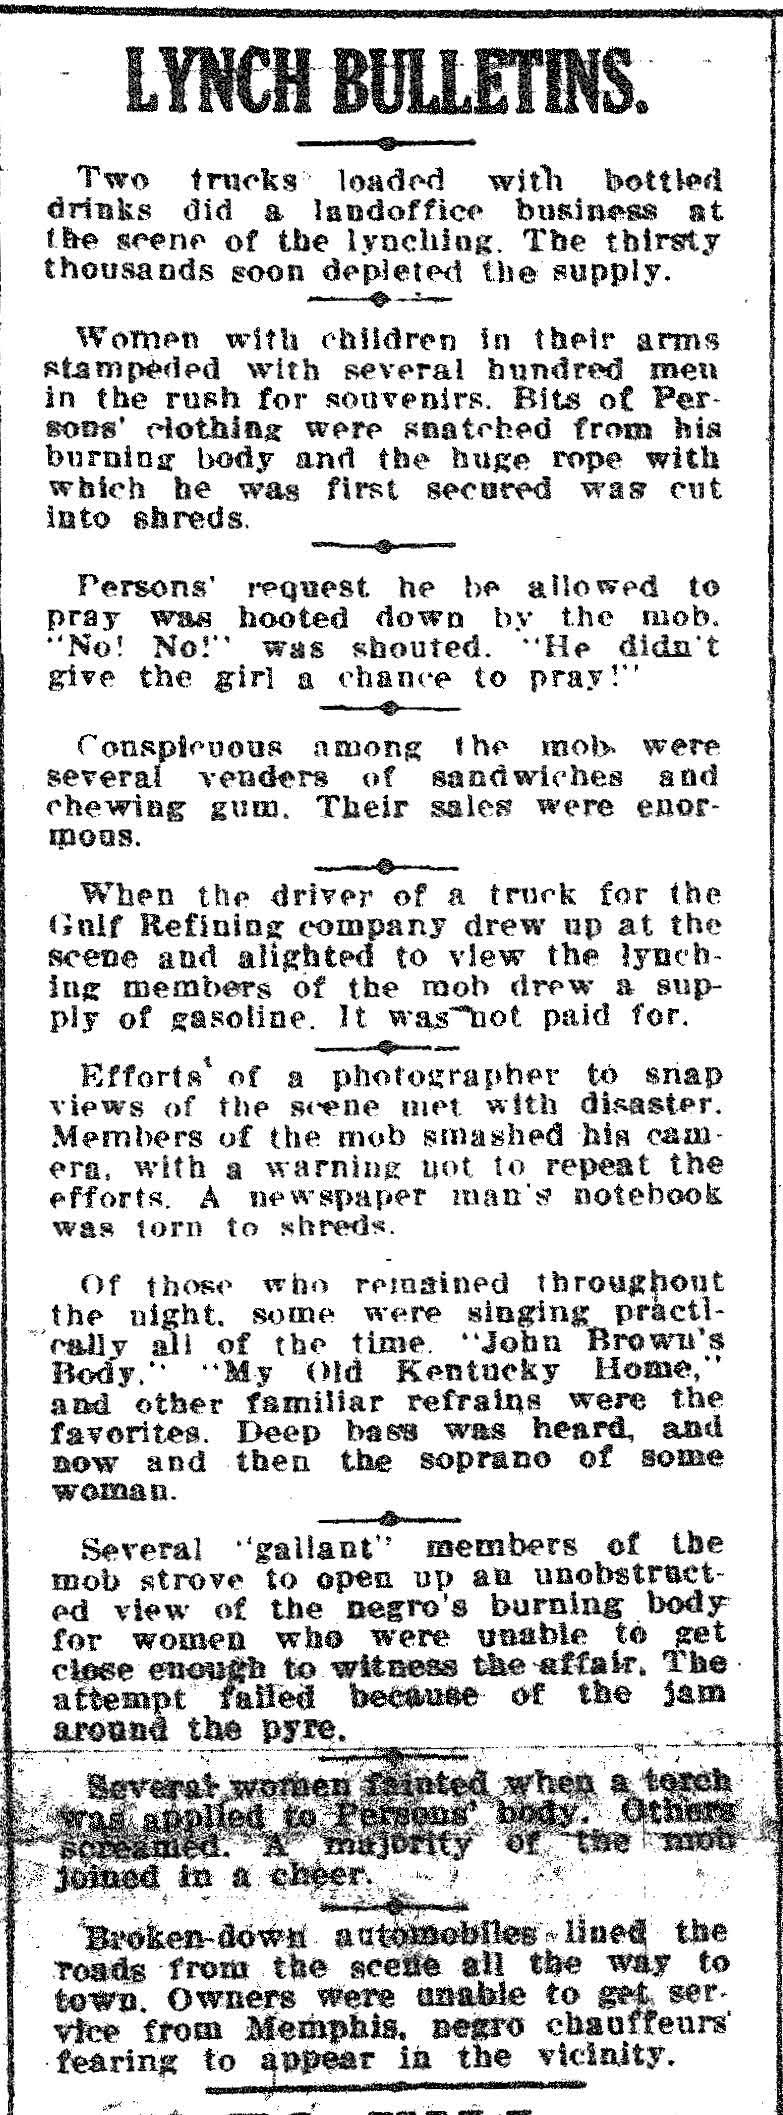 News Scimitar, 5/22/1917 (Lynch bulletins)